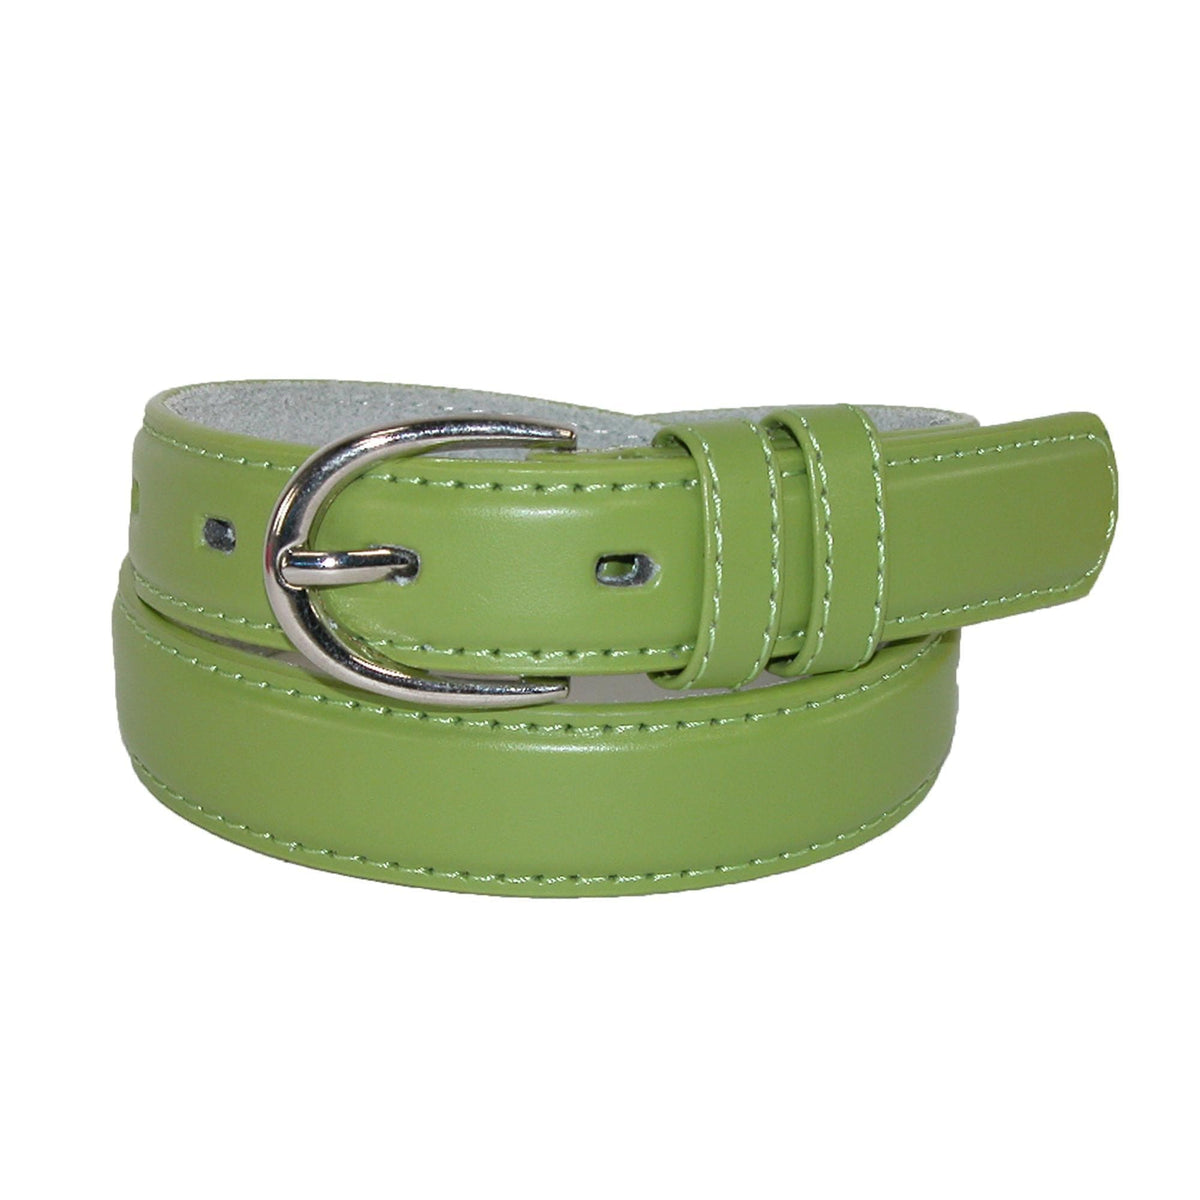 Toddlers Basic 1 Inch Leather Belt by CTM | Dress Belts at BeltOutlet.com